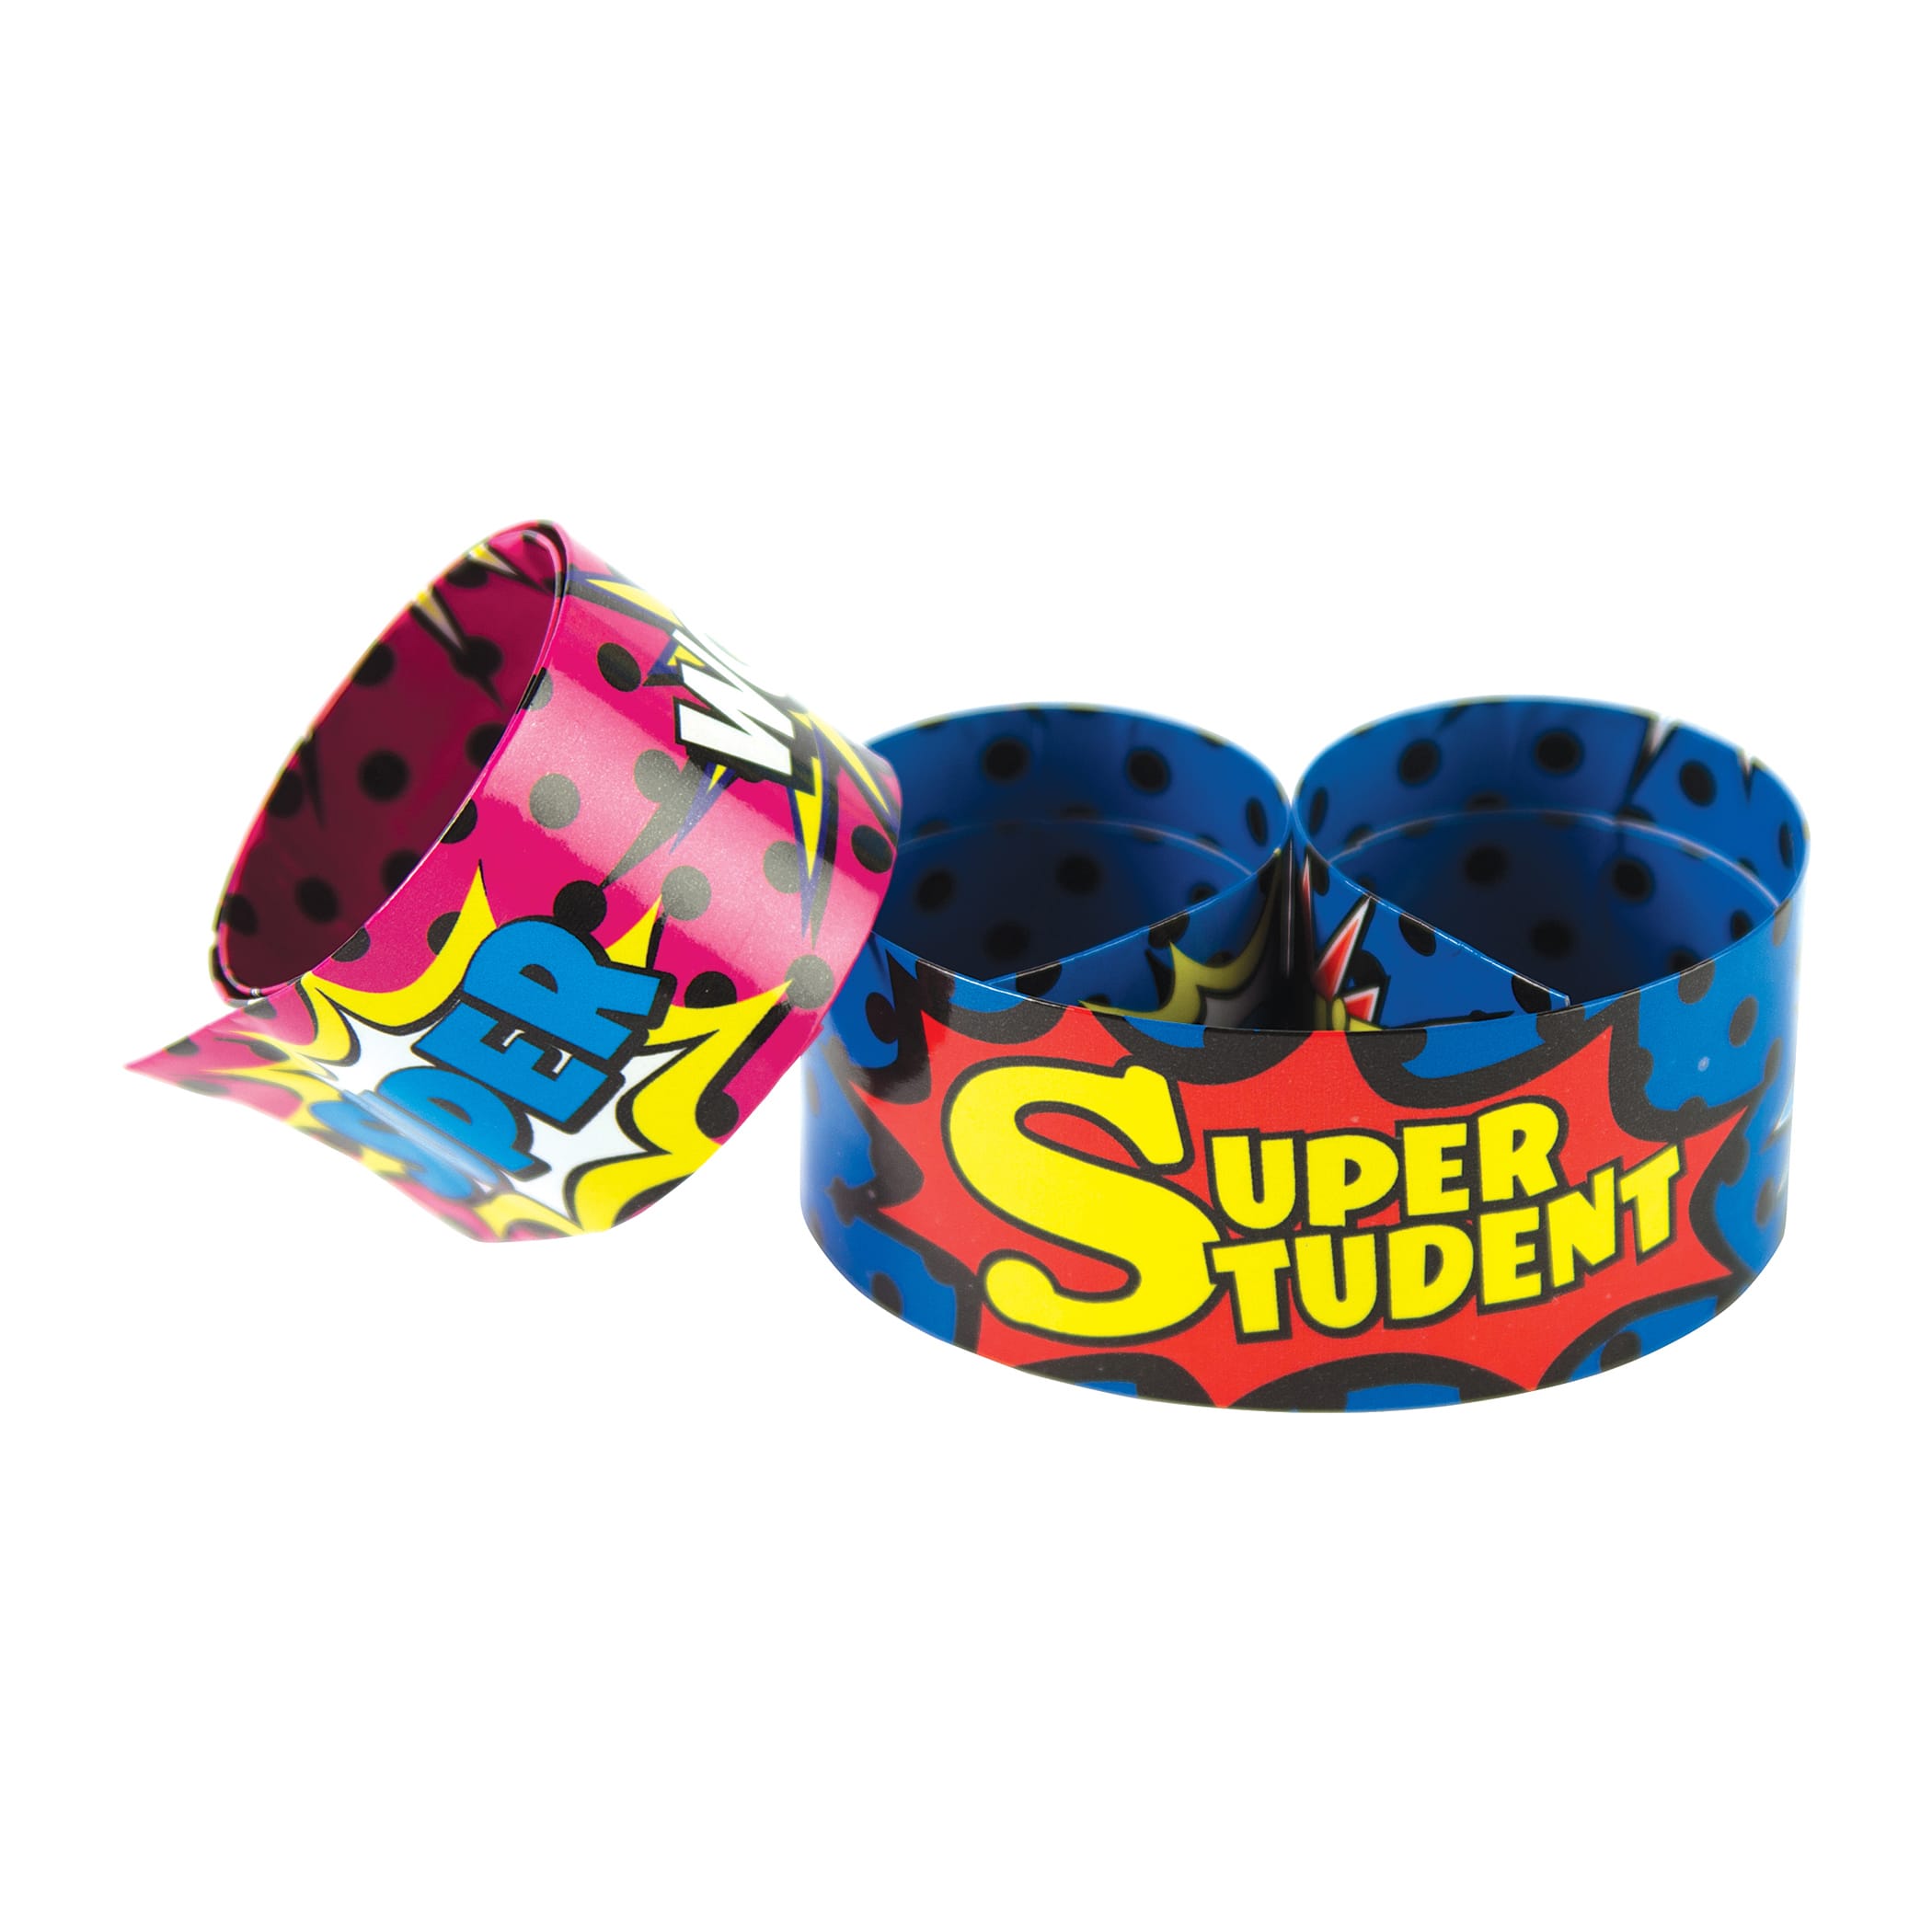 Superhero Super Student Slap Bracelets, 6 Packs